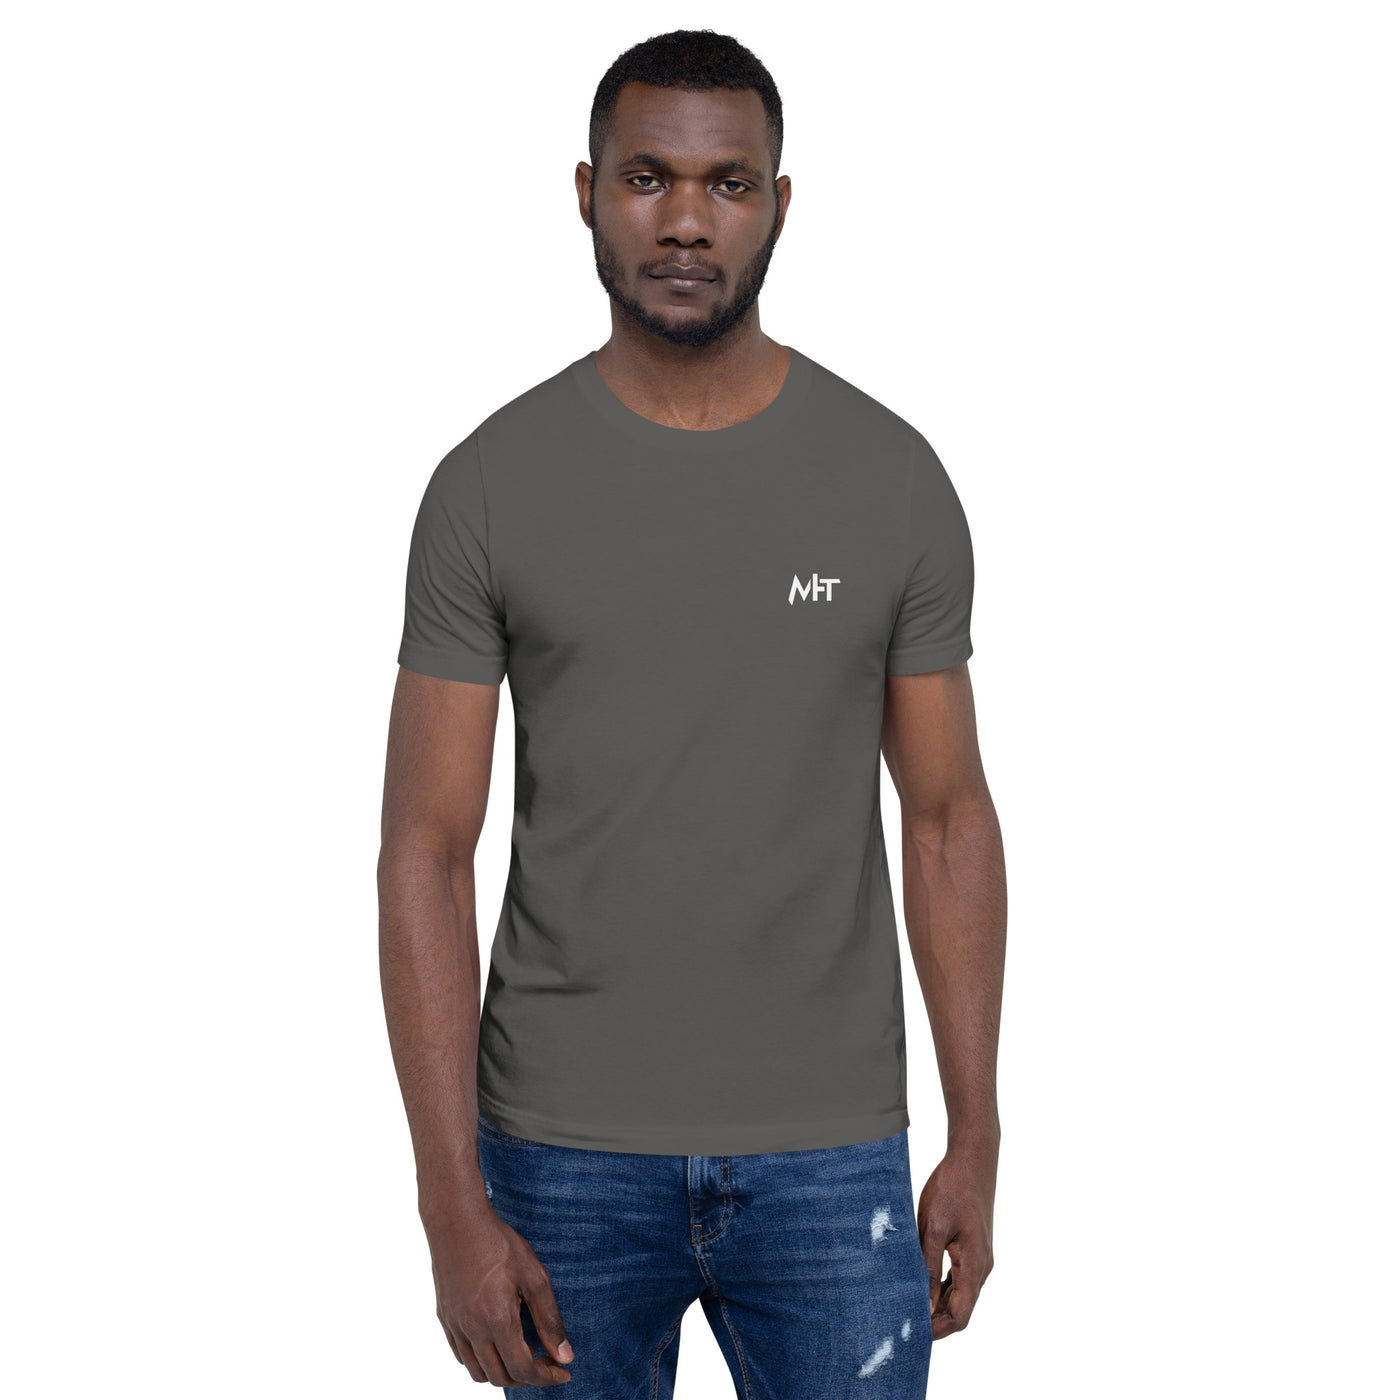 Payload - Unisex t-shirt (back print)